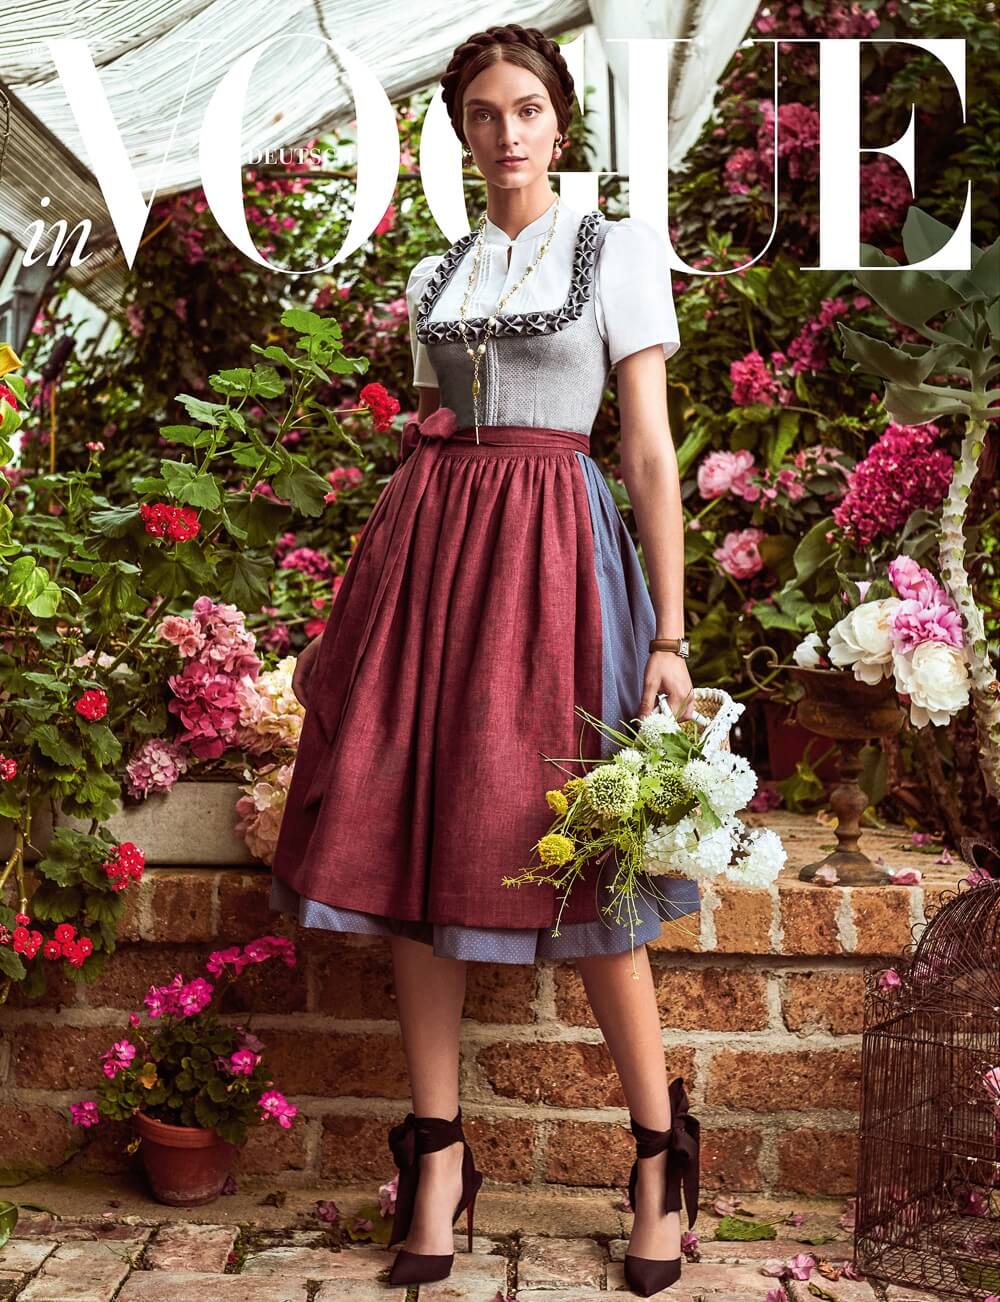 Vogue-Germany-August-2018-Deimante-Misiunaite-Andreas-Ortner-5